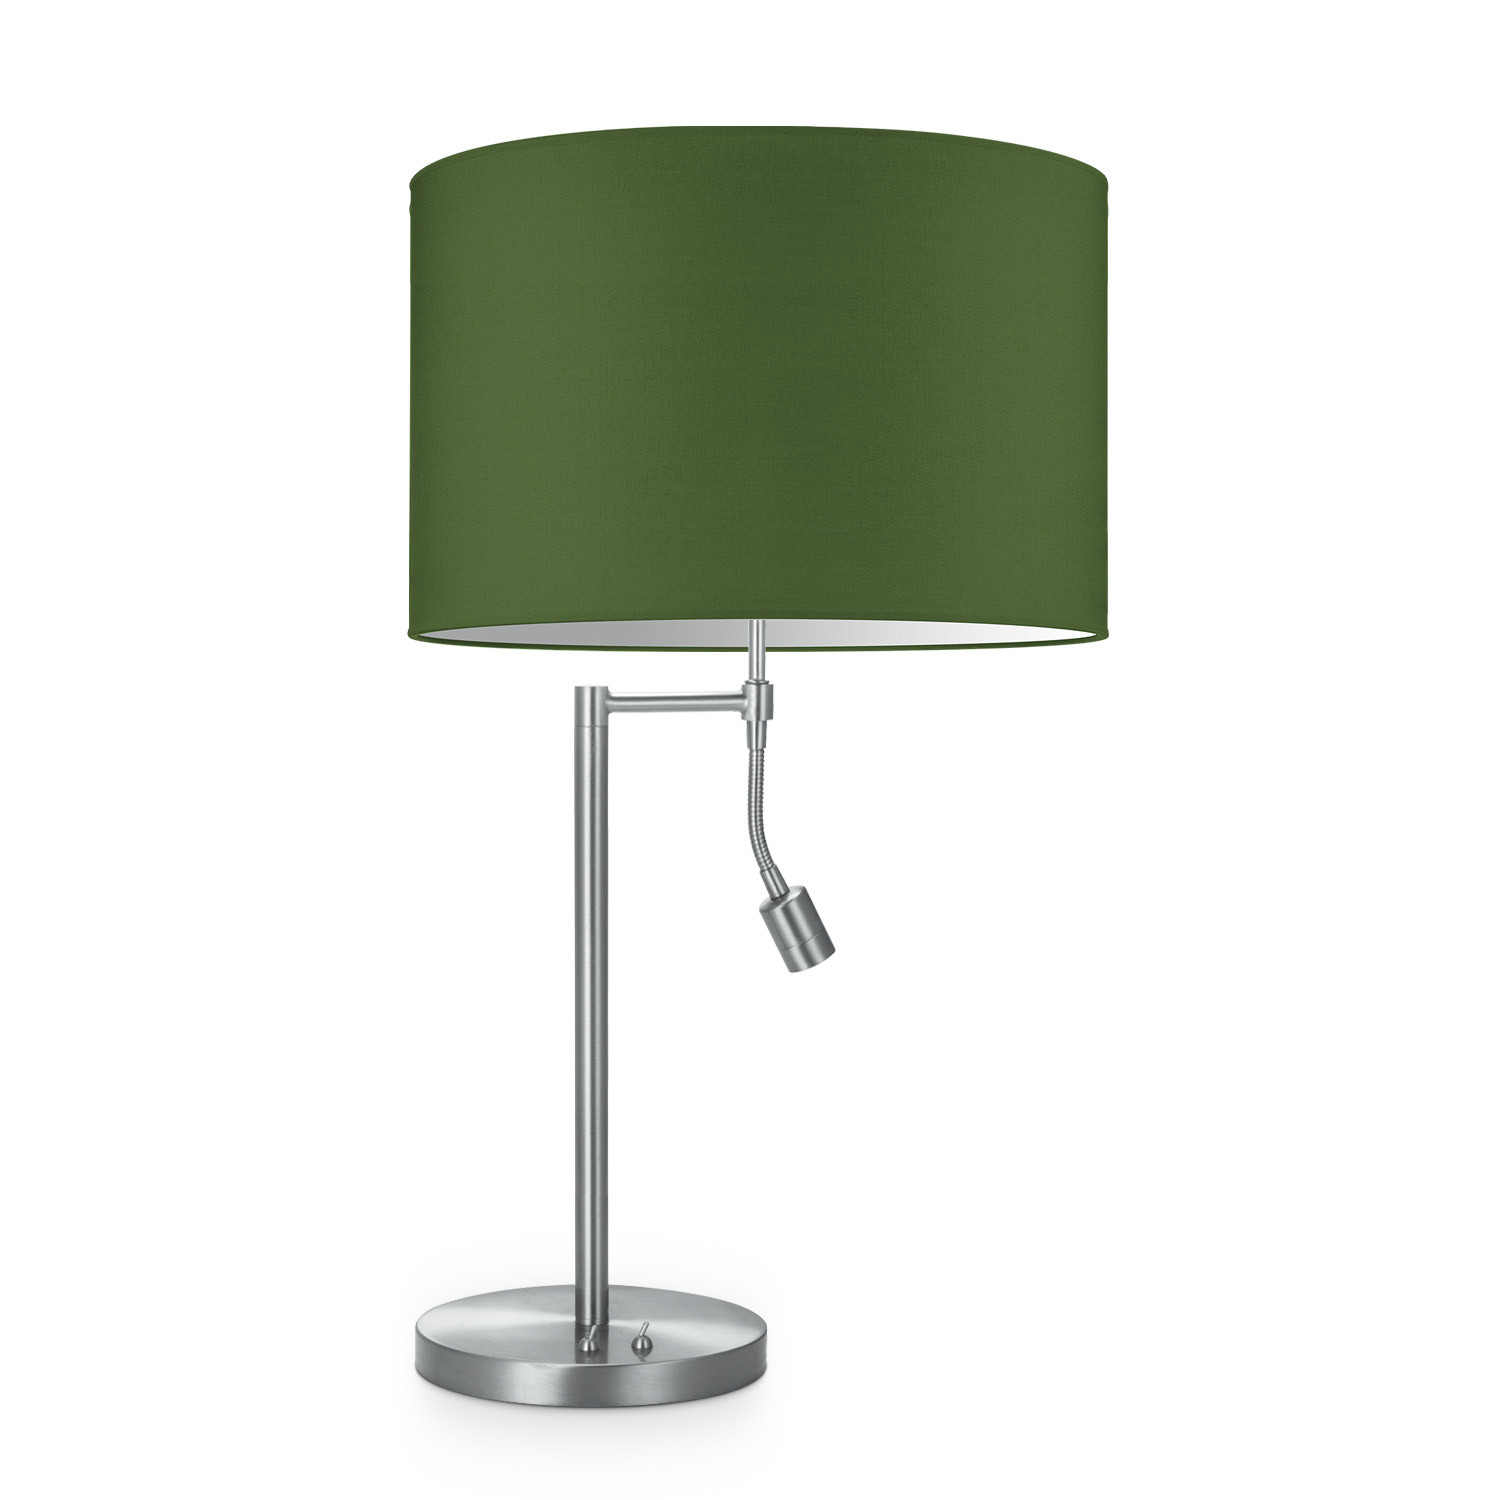 Light depot - tafellamp read bling Ø 35 cm - groen - Outlet